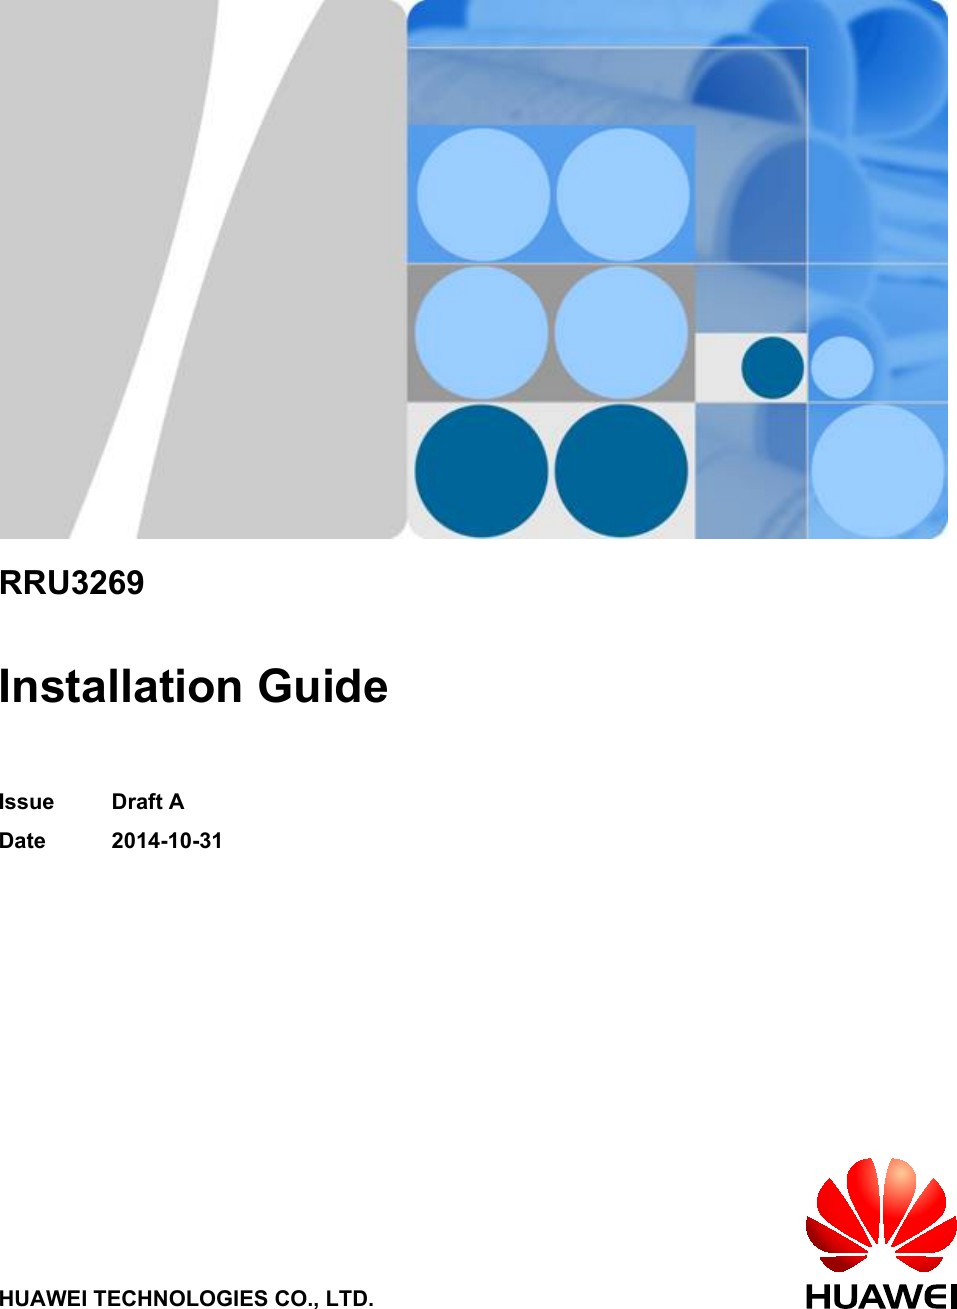 RRU3269Installation GuideIssue Draft ADate 2014-10-31HUAWEI TECHNOLOGIES CO., LTD.